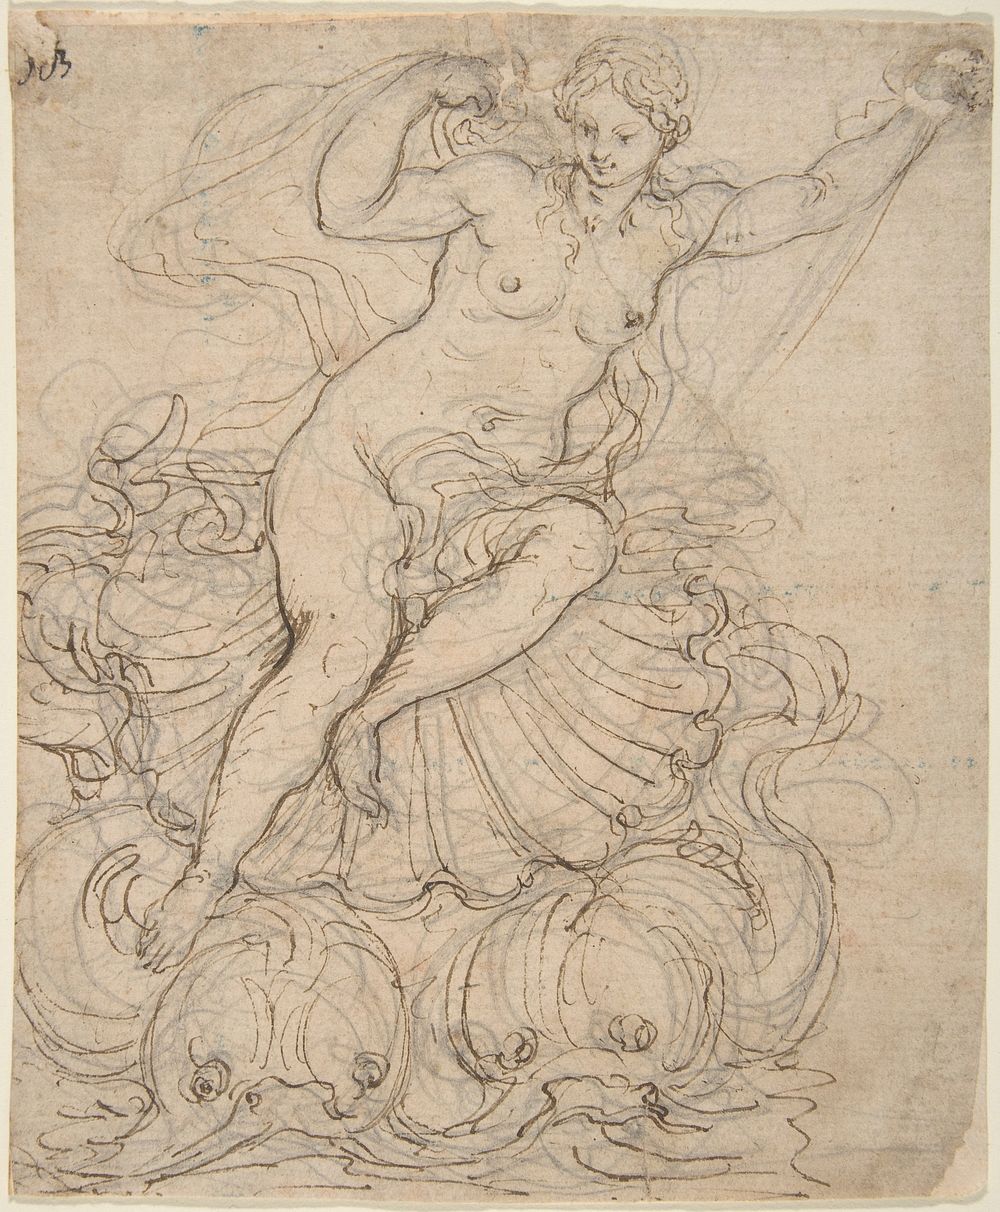 Galatea on her Chariot drawn by Dolphins  by Giovanni Battista Foggini